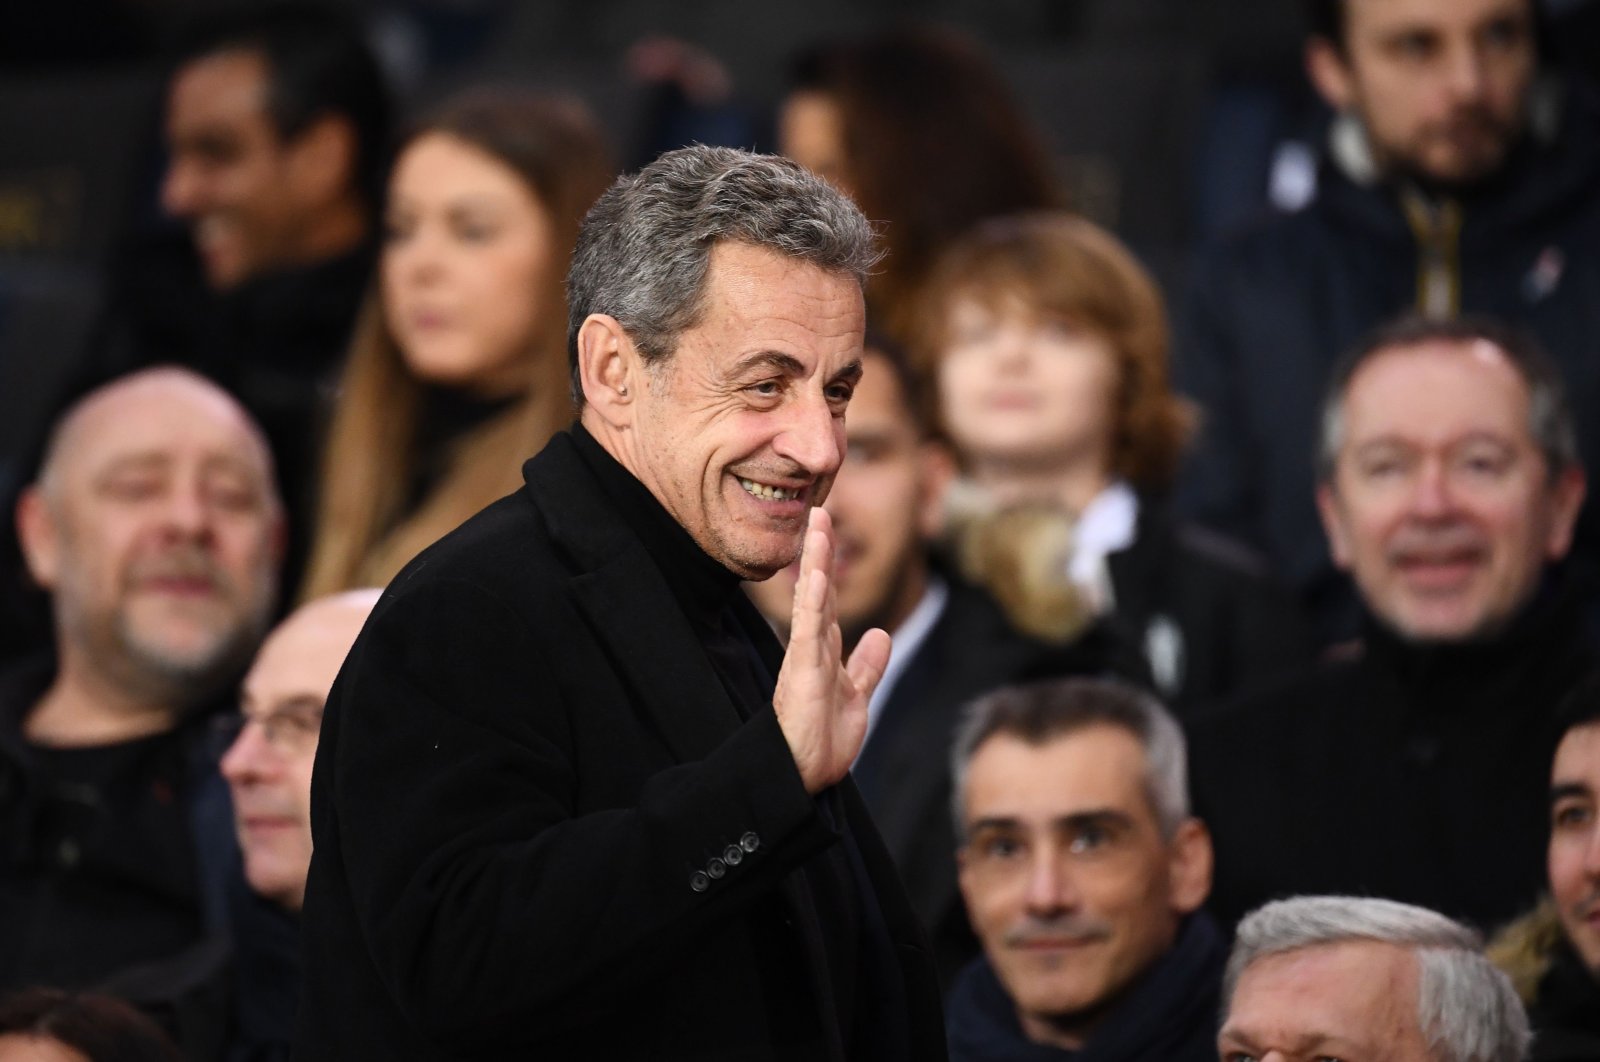 Former French President Nicolas Sarkozy attends a football match, Paris, France, Feb. 23, 2020. (AFP Photo)